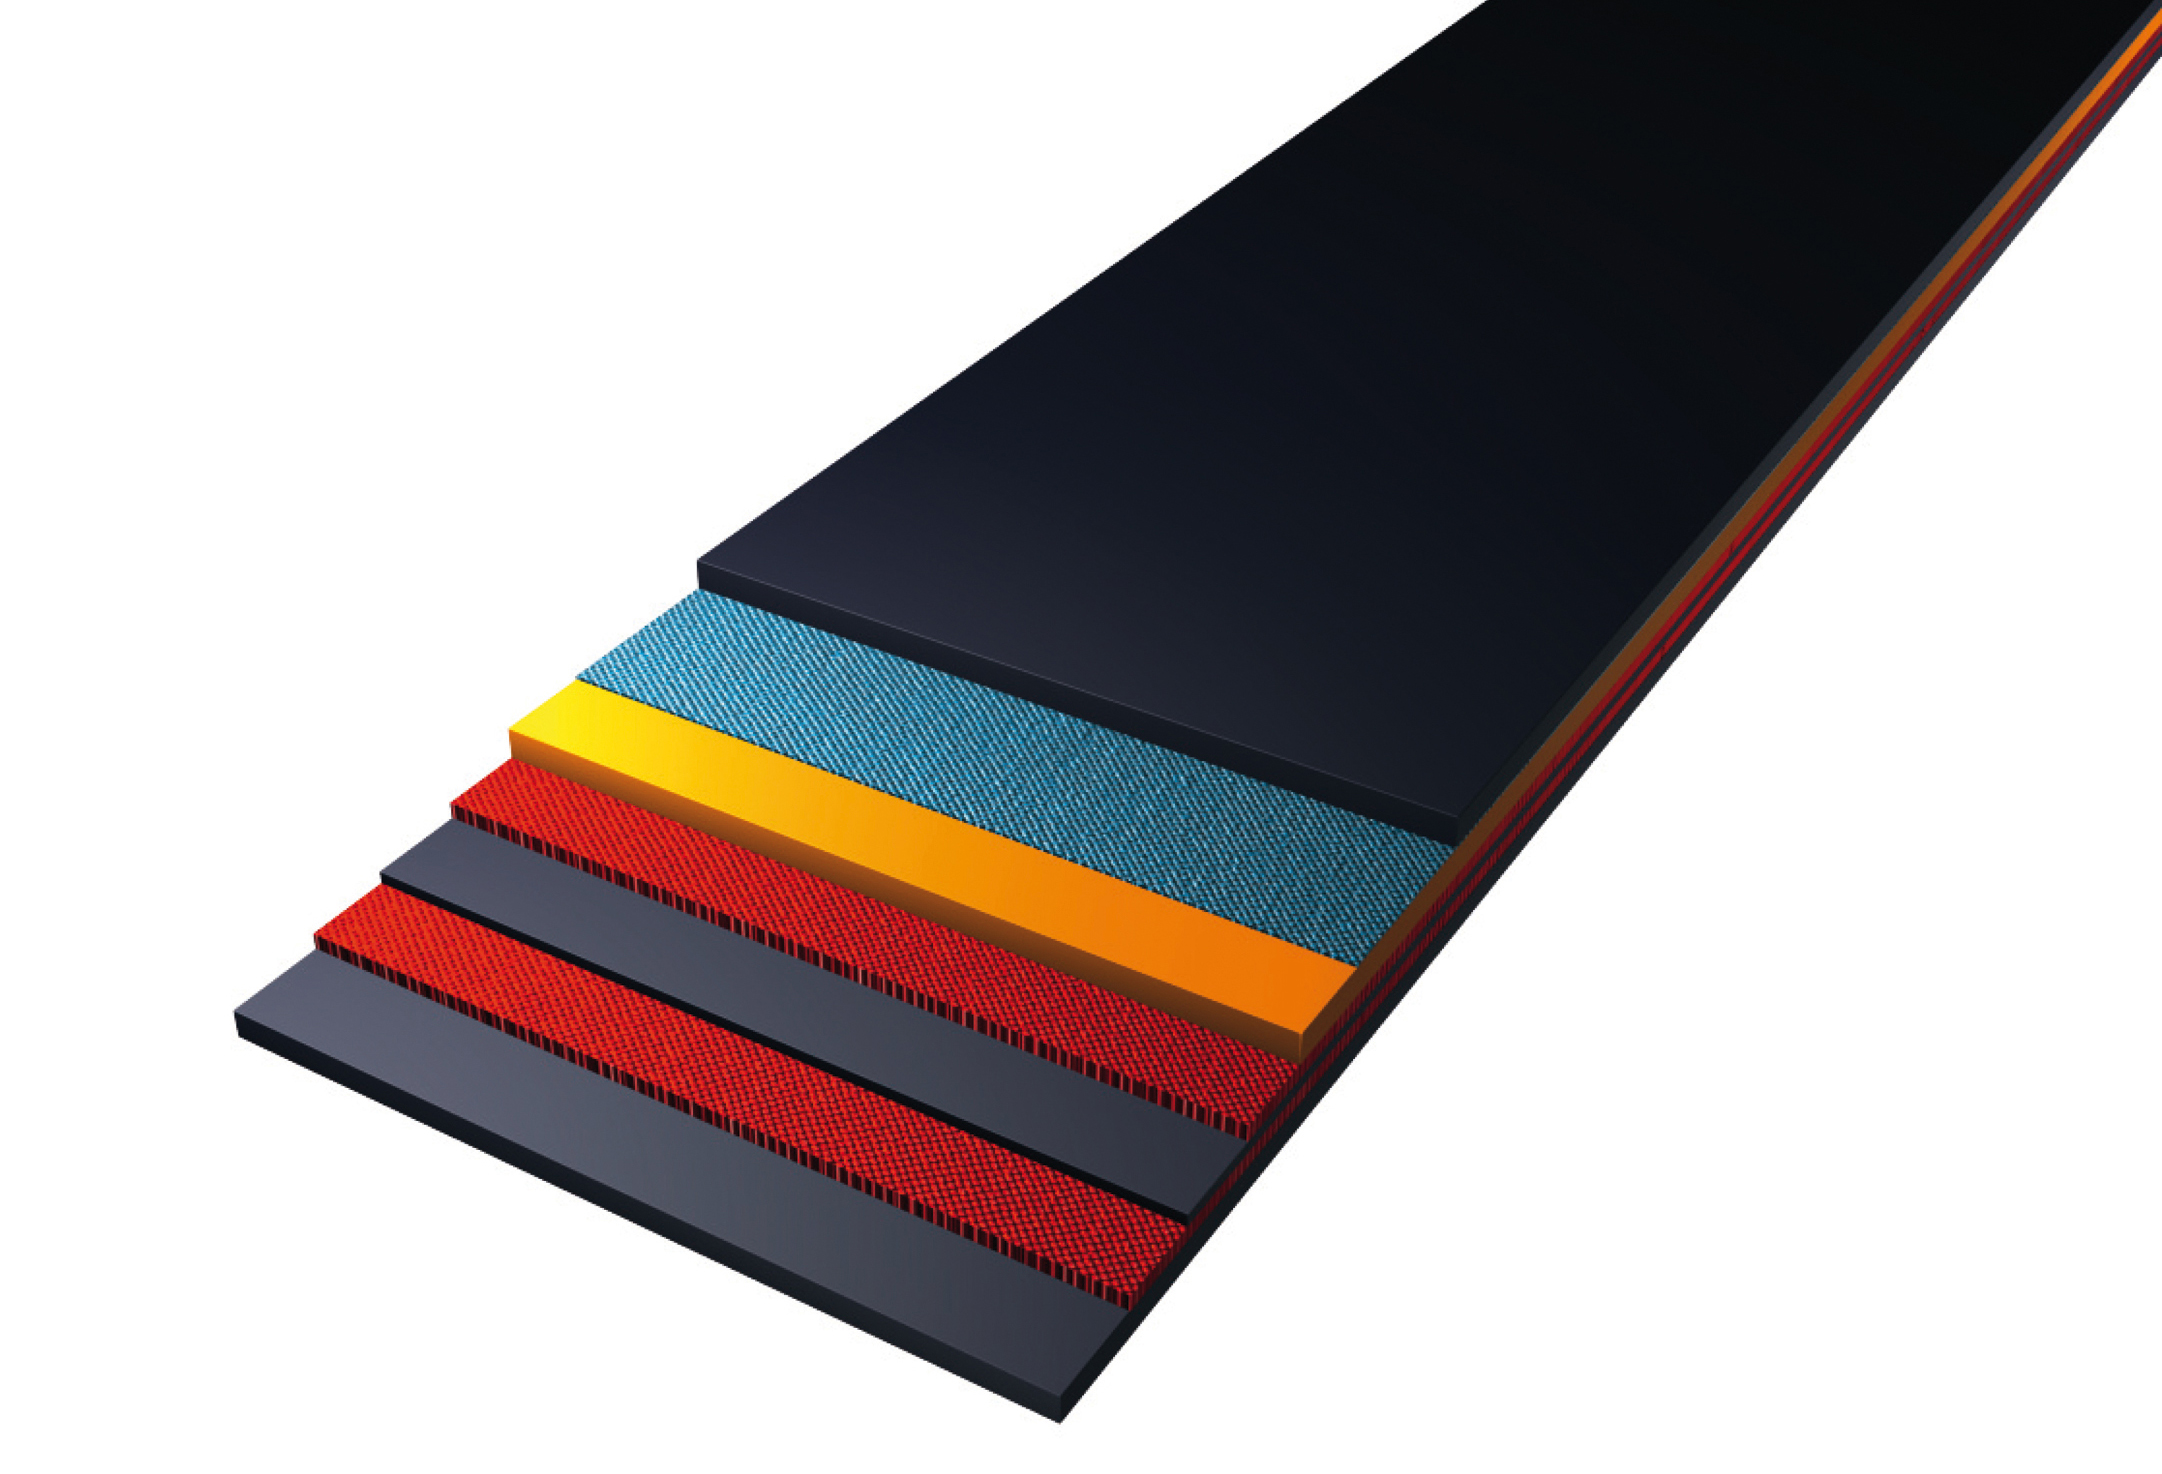 ContiTech’s heat-resistant conveyor belt